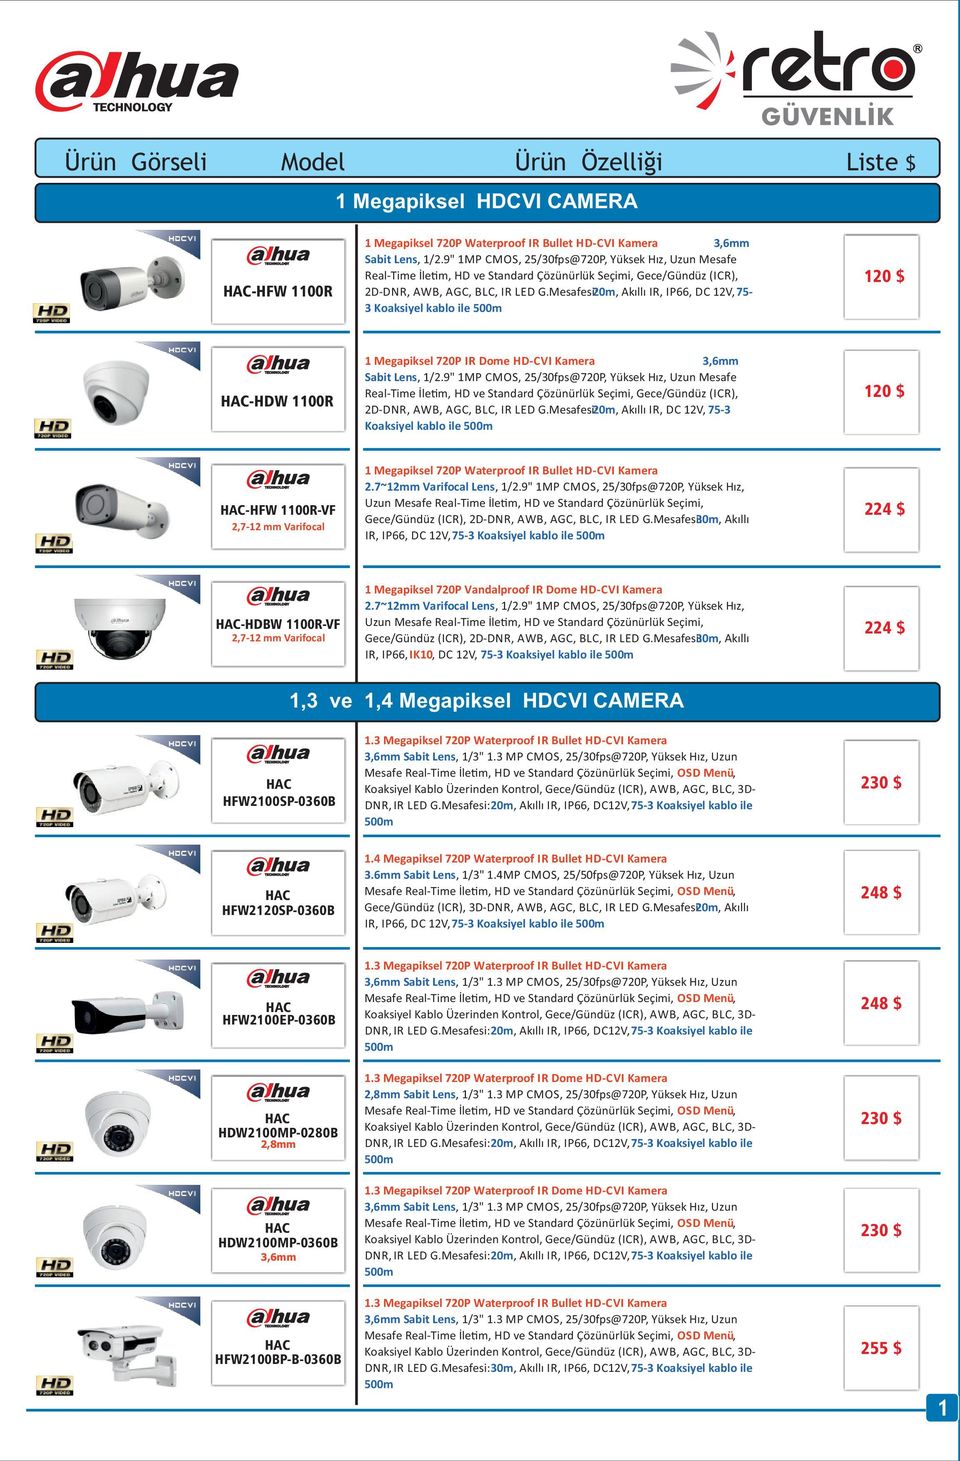 Mesafesi: 20m, Akıllı IR, IP66, DC 12V, 75-3 Koaksiyel kablo ile 120 $ -HDW 1100R 1 Megapiksel 720P IR Dome HD-CVI Kamera 3,6mm Sabit Lens, 1/2.